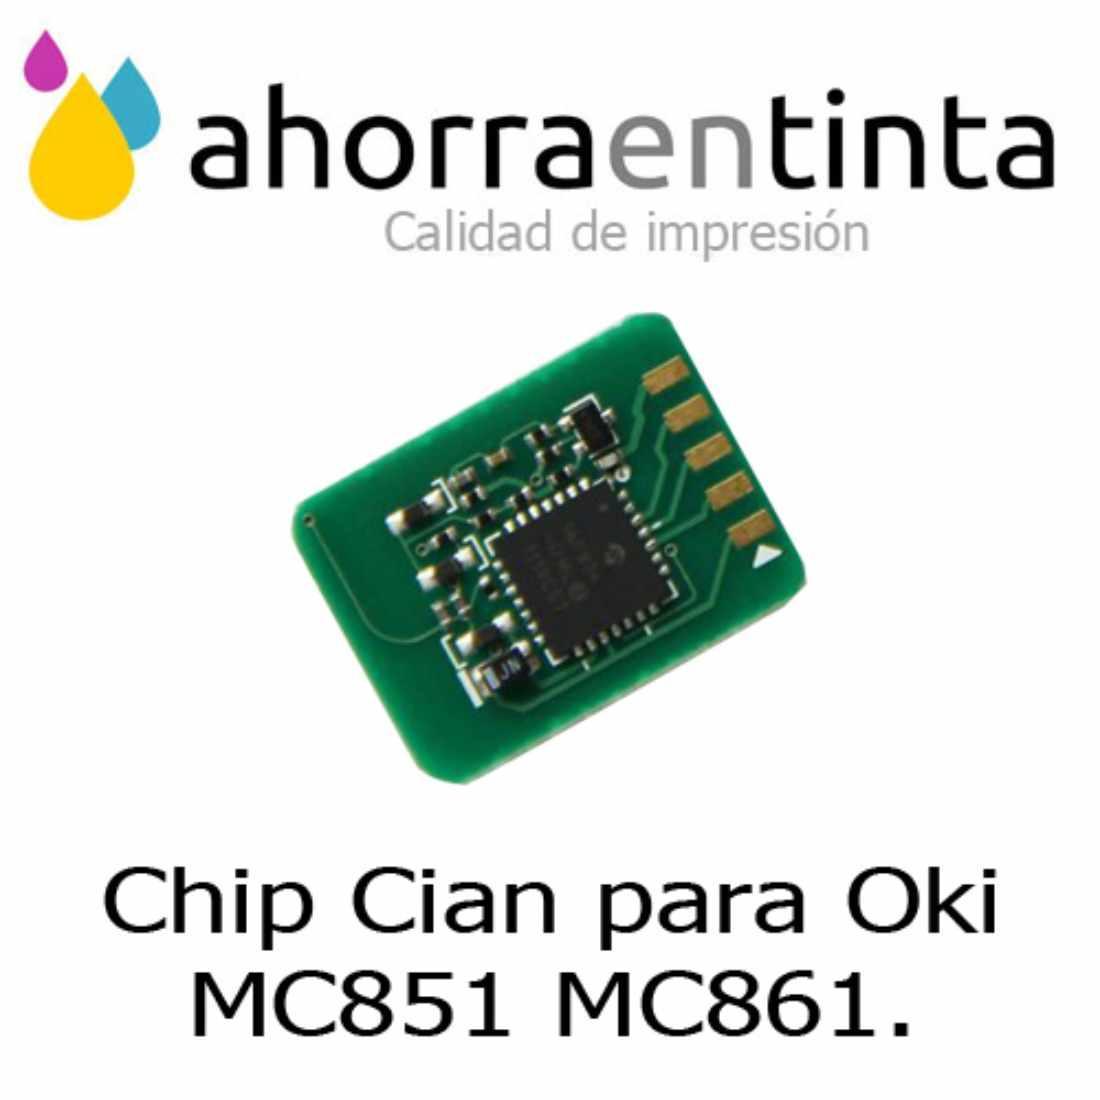 Foto de producto Chip Cian para Oki MC851 MC861